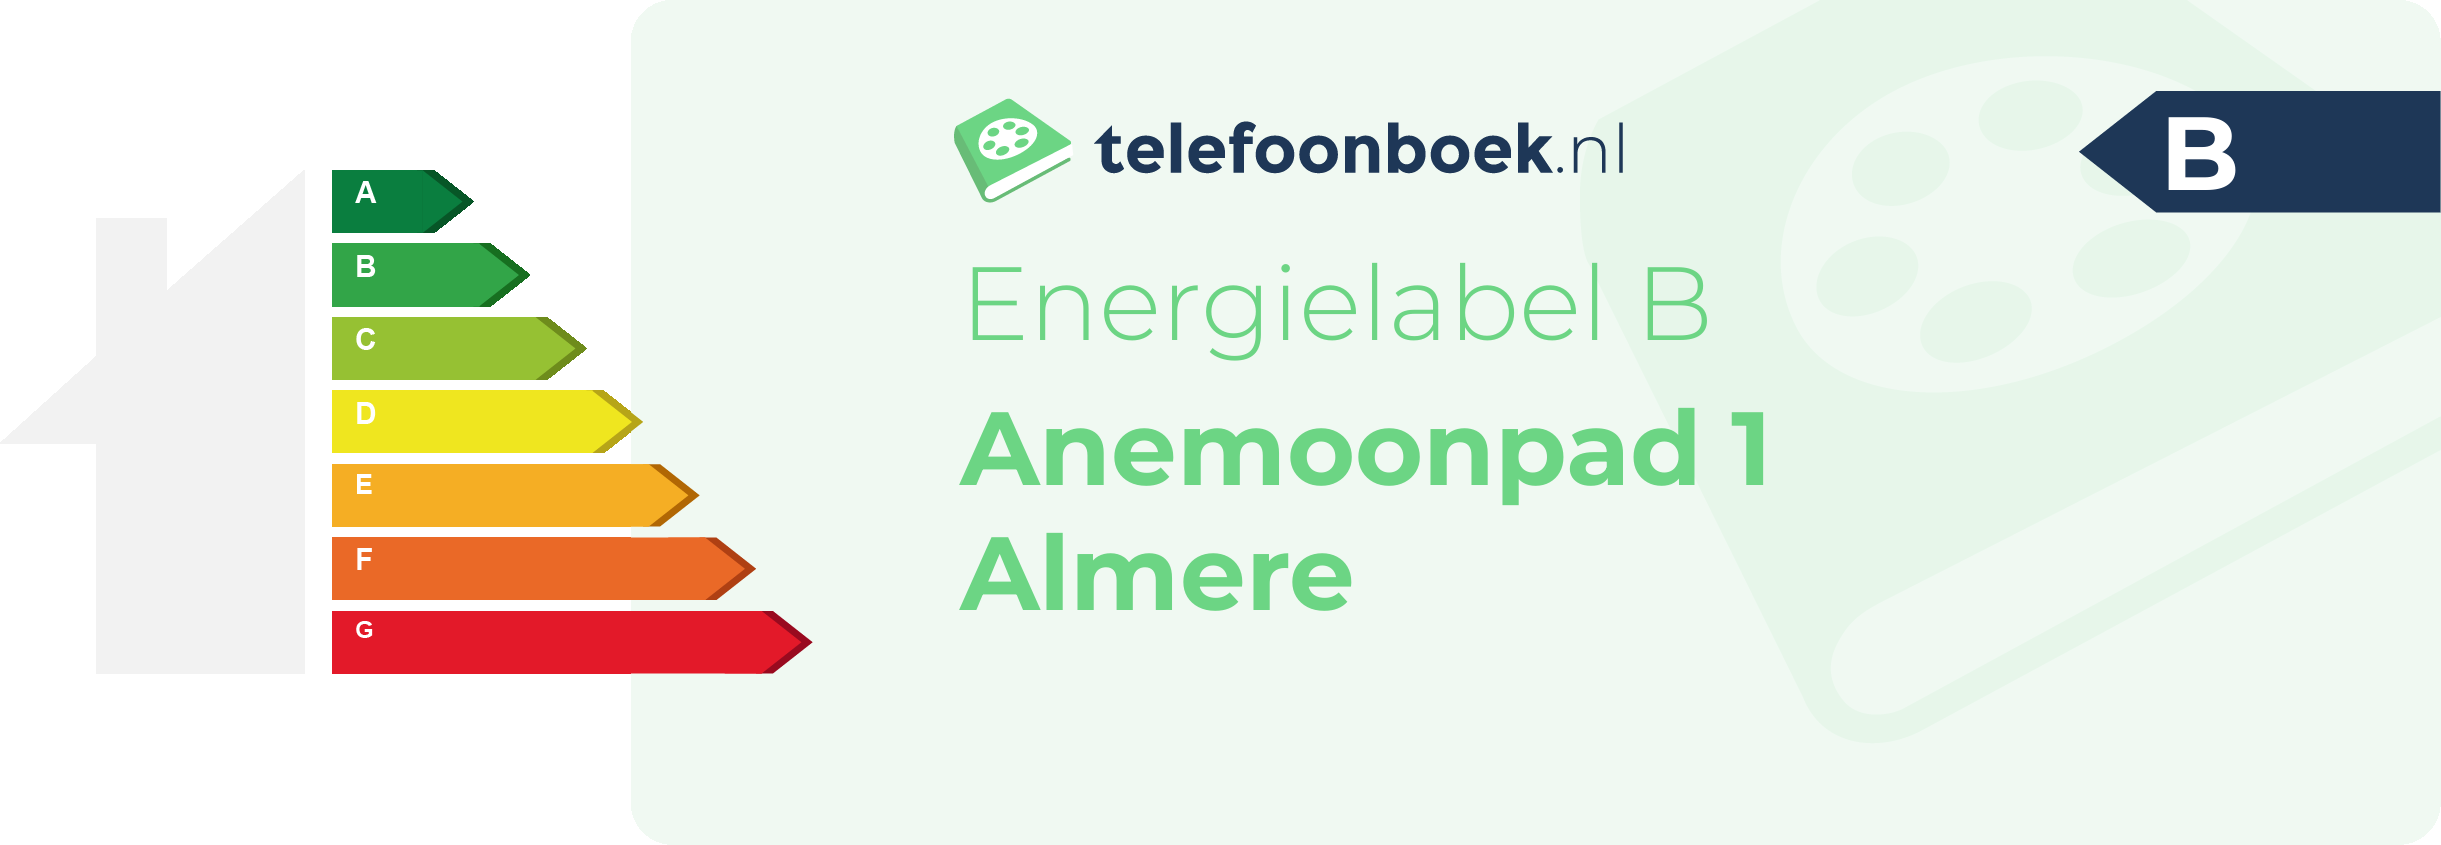 Energielabel Anemoonpad 1 Almere